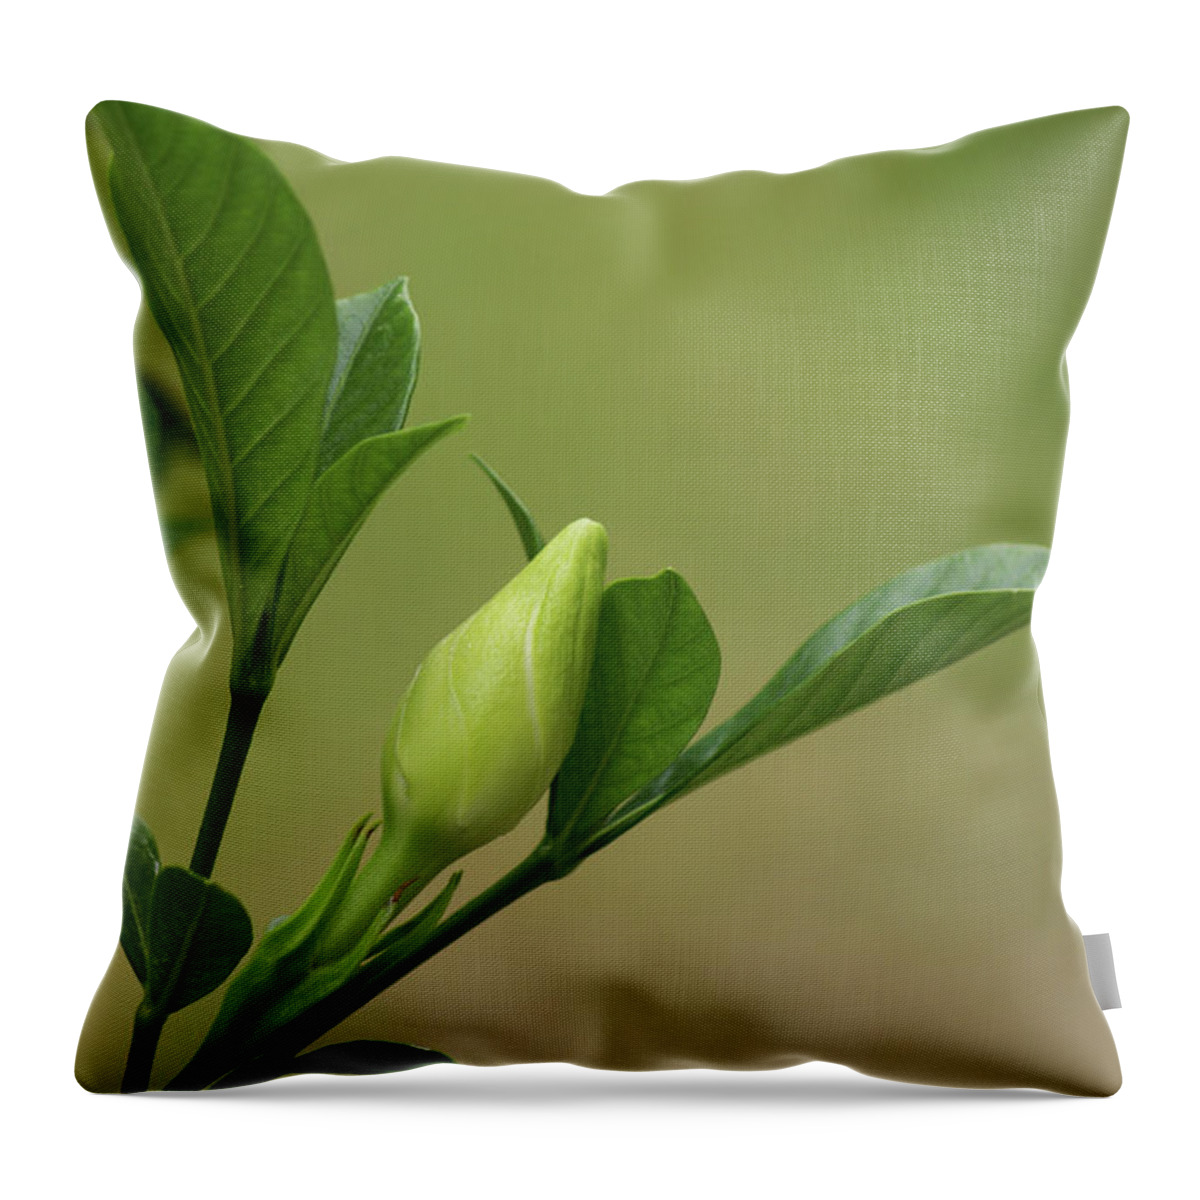  Throw Pillow featuring the photograph Gardenia Bud by Heather E Harman